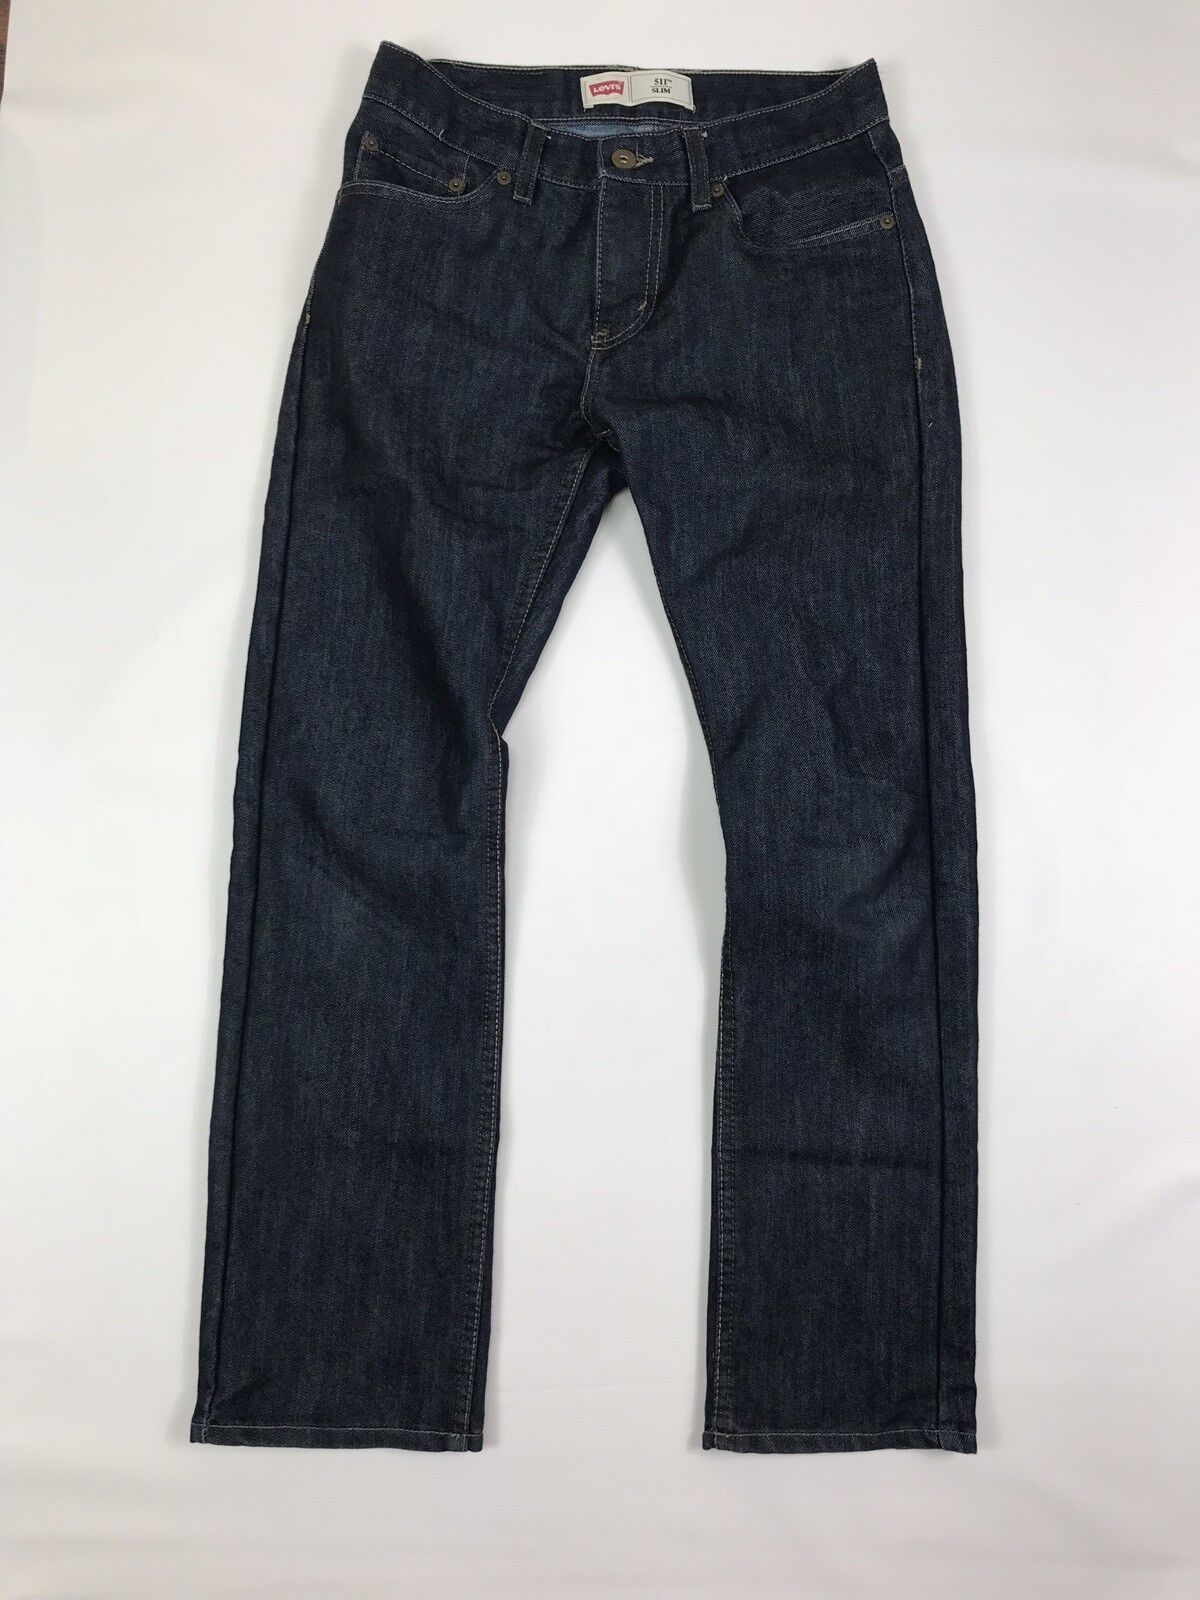 Levi's 511 Slim Boys 14 reg 27 27 Dark Wash Denim Jeans Pants 27x27 EUC - $14.84